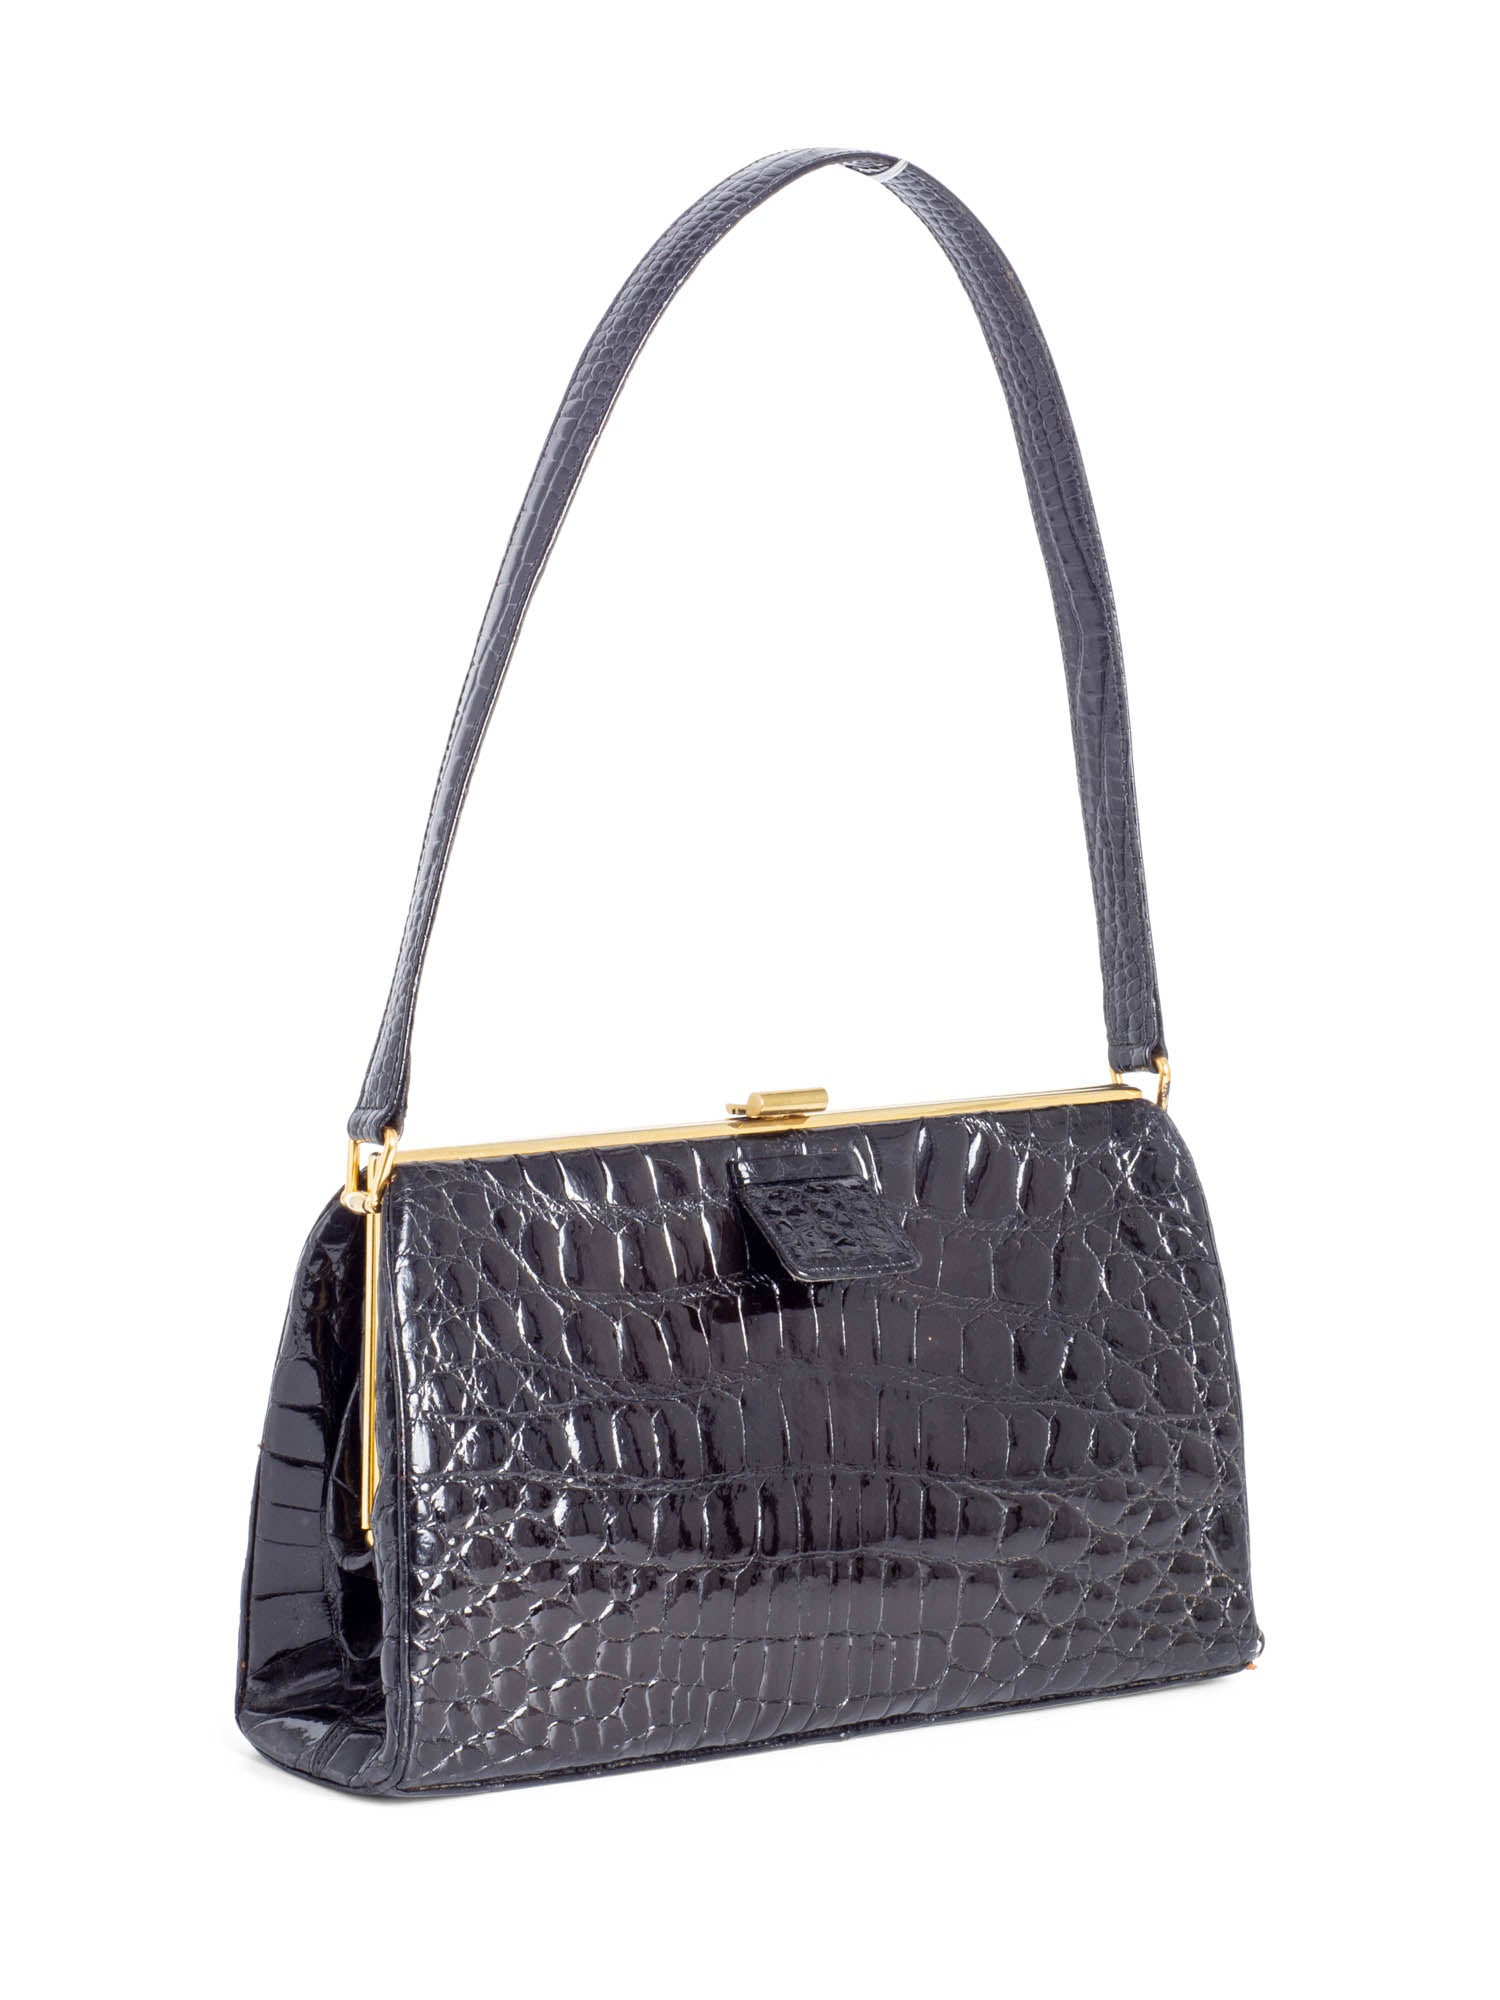 Rendl Original Shiny Crocodile Top Handle Bag Black Gold